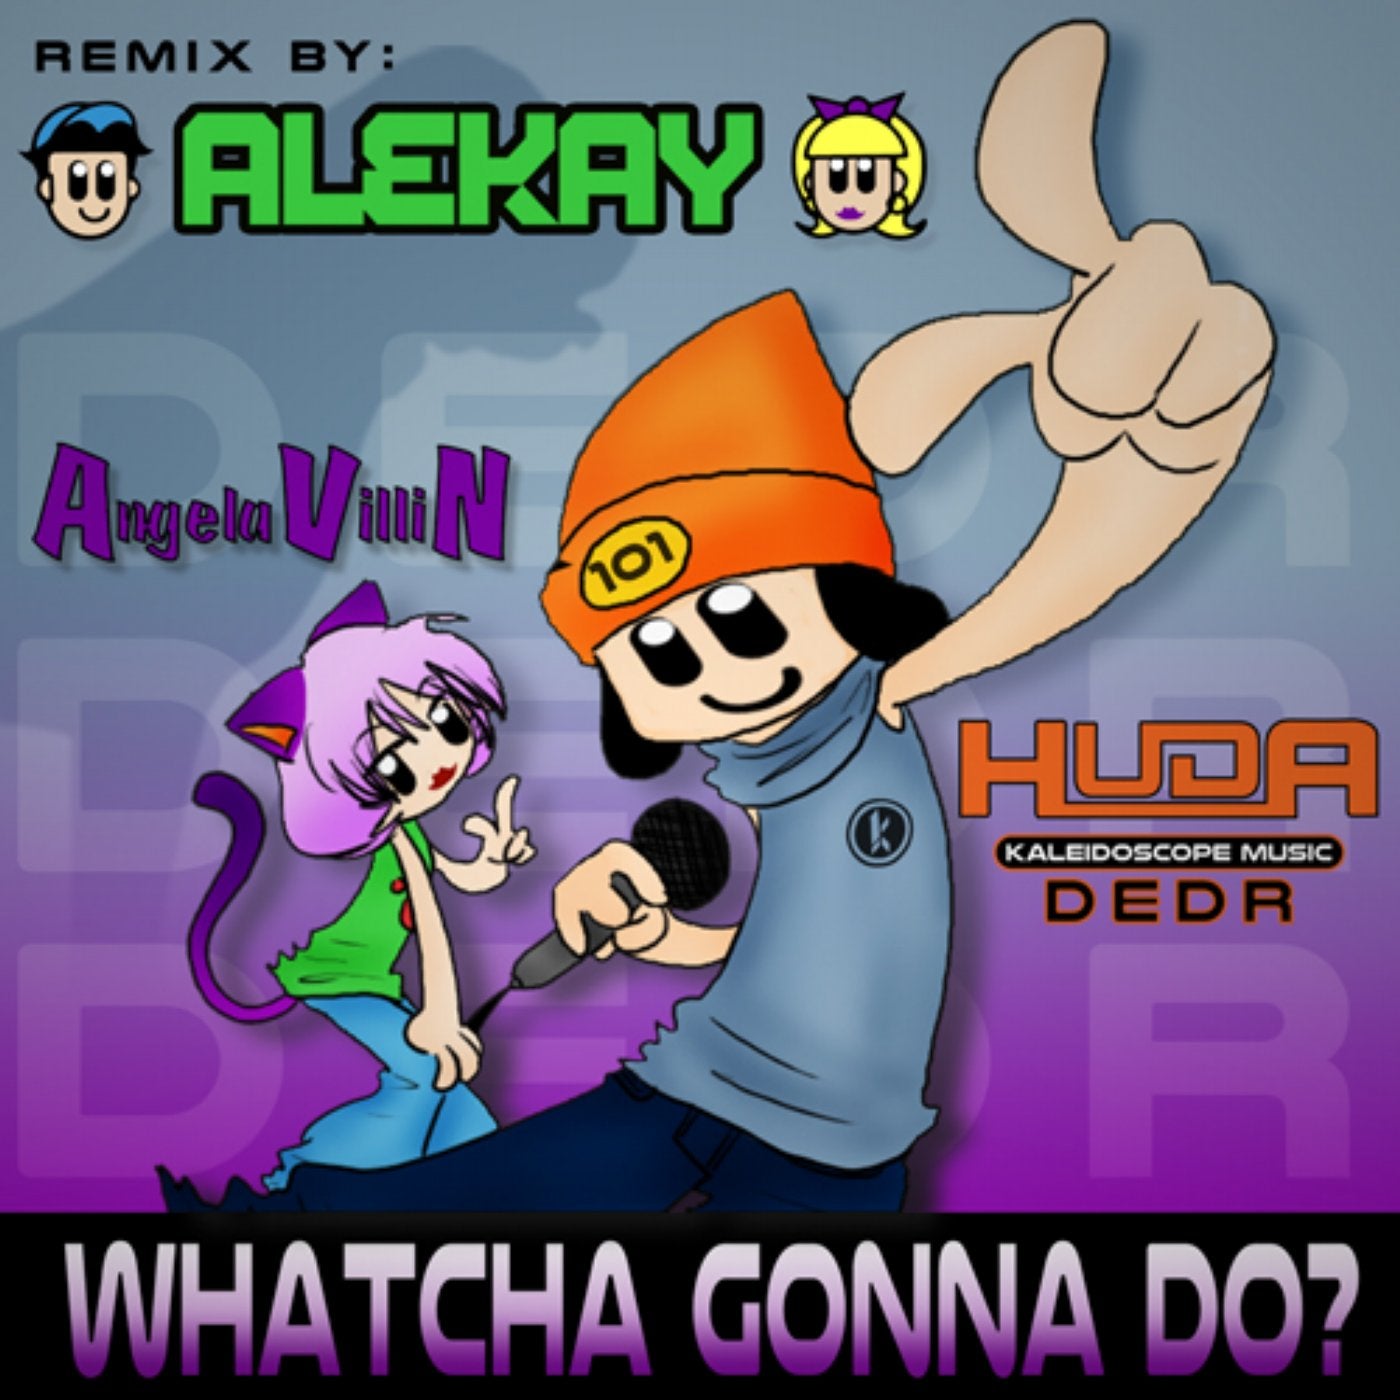 Whatcha Gonna Do? (Alekay Remix)